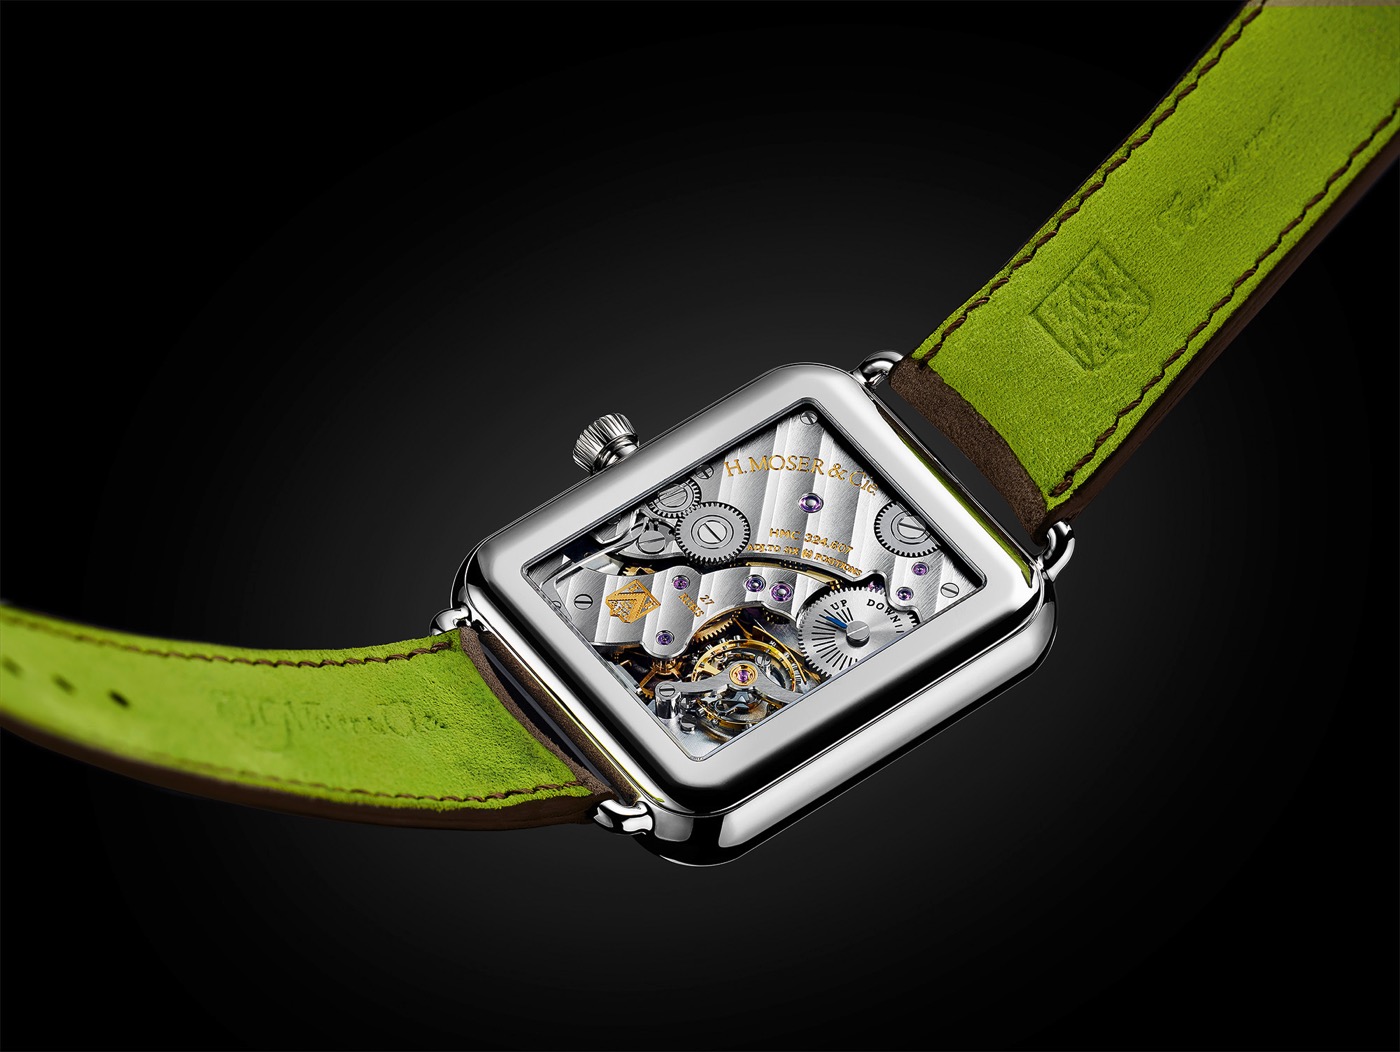 ｢Apple Watch｣にそっくりな高級機械式腕時計｢Swiss Alp Watch｣が登場 − 価格は約300万円